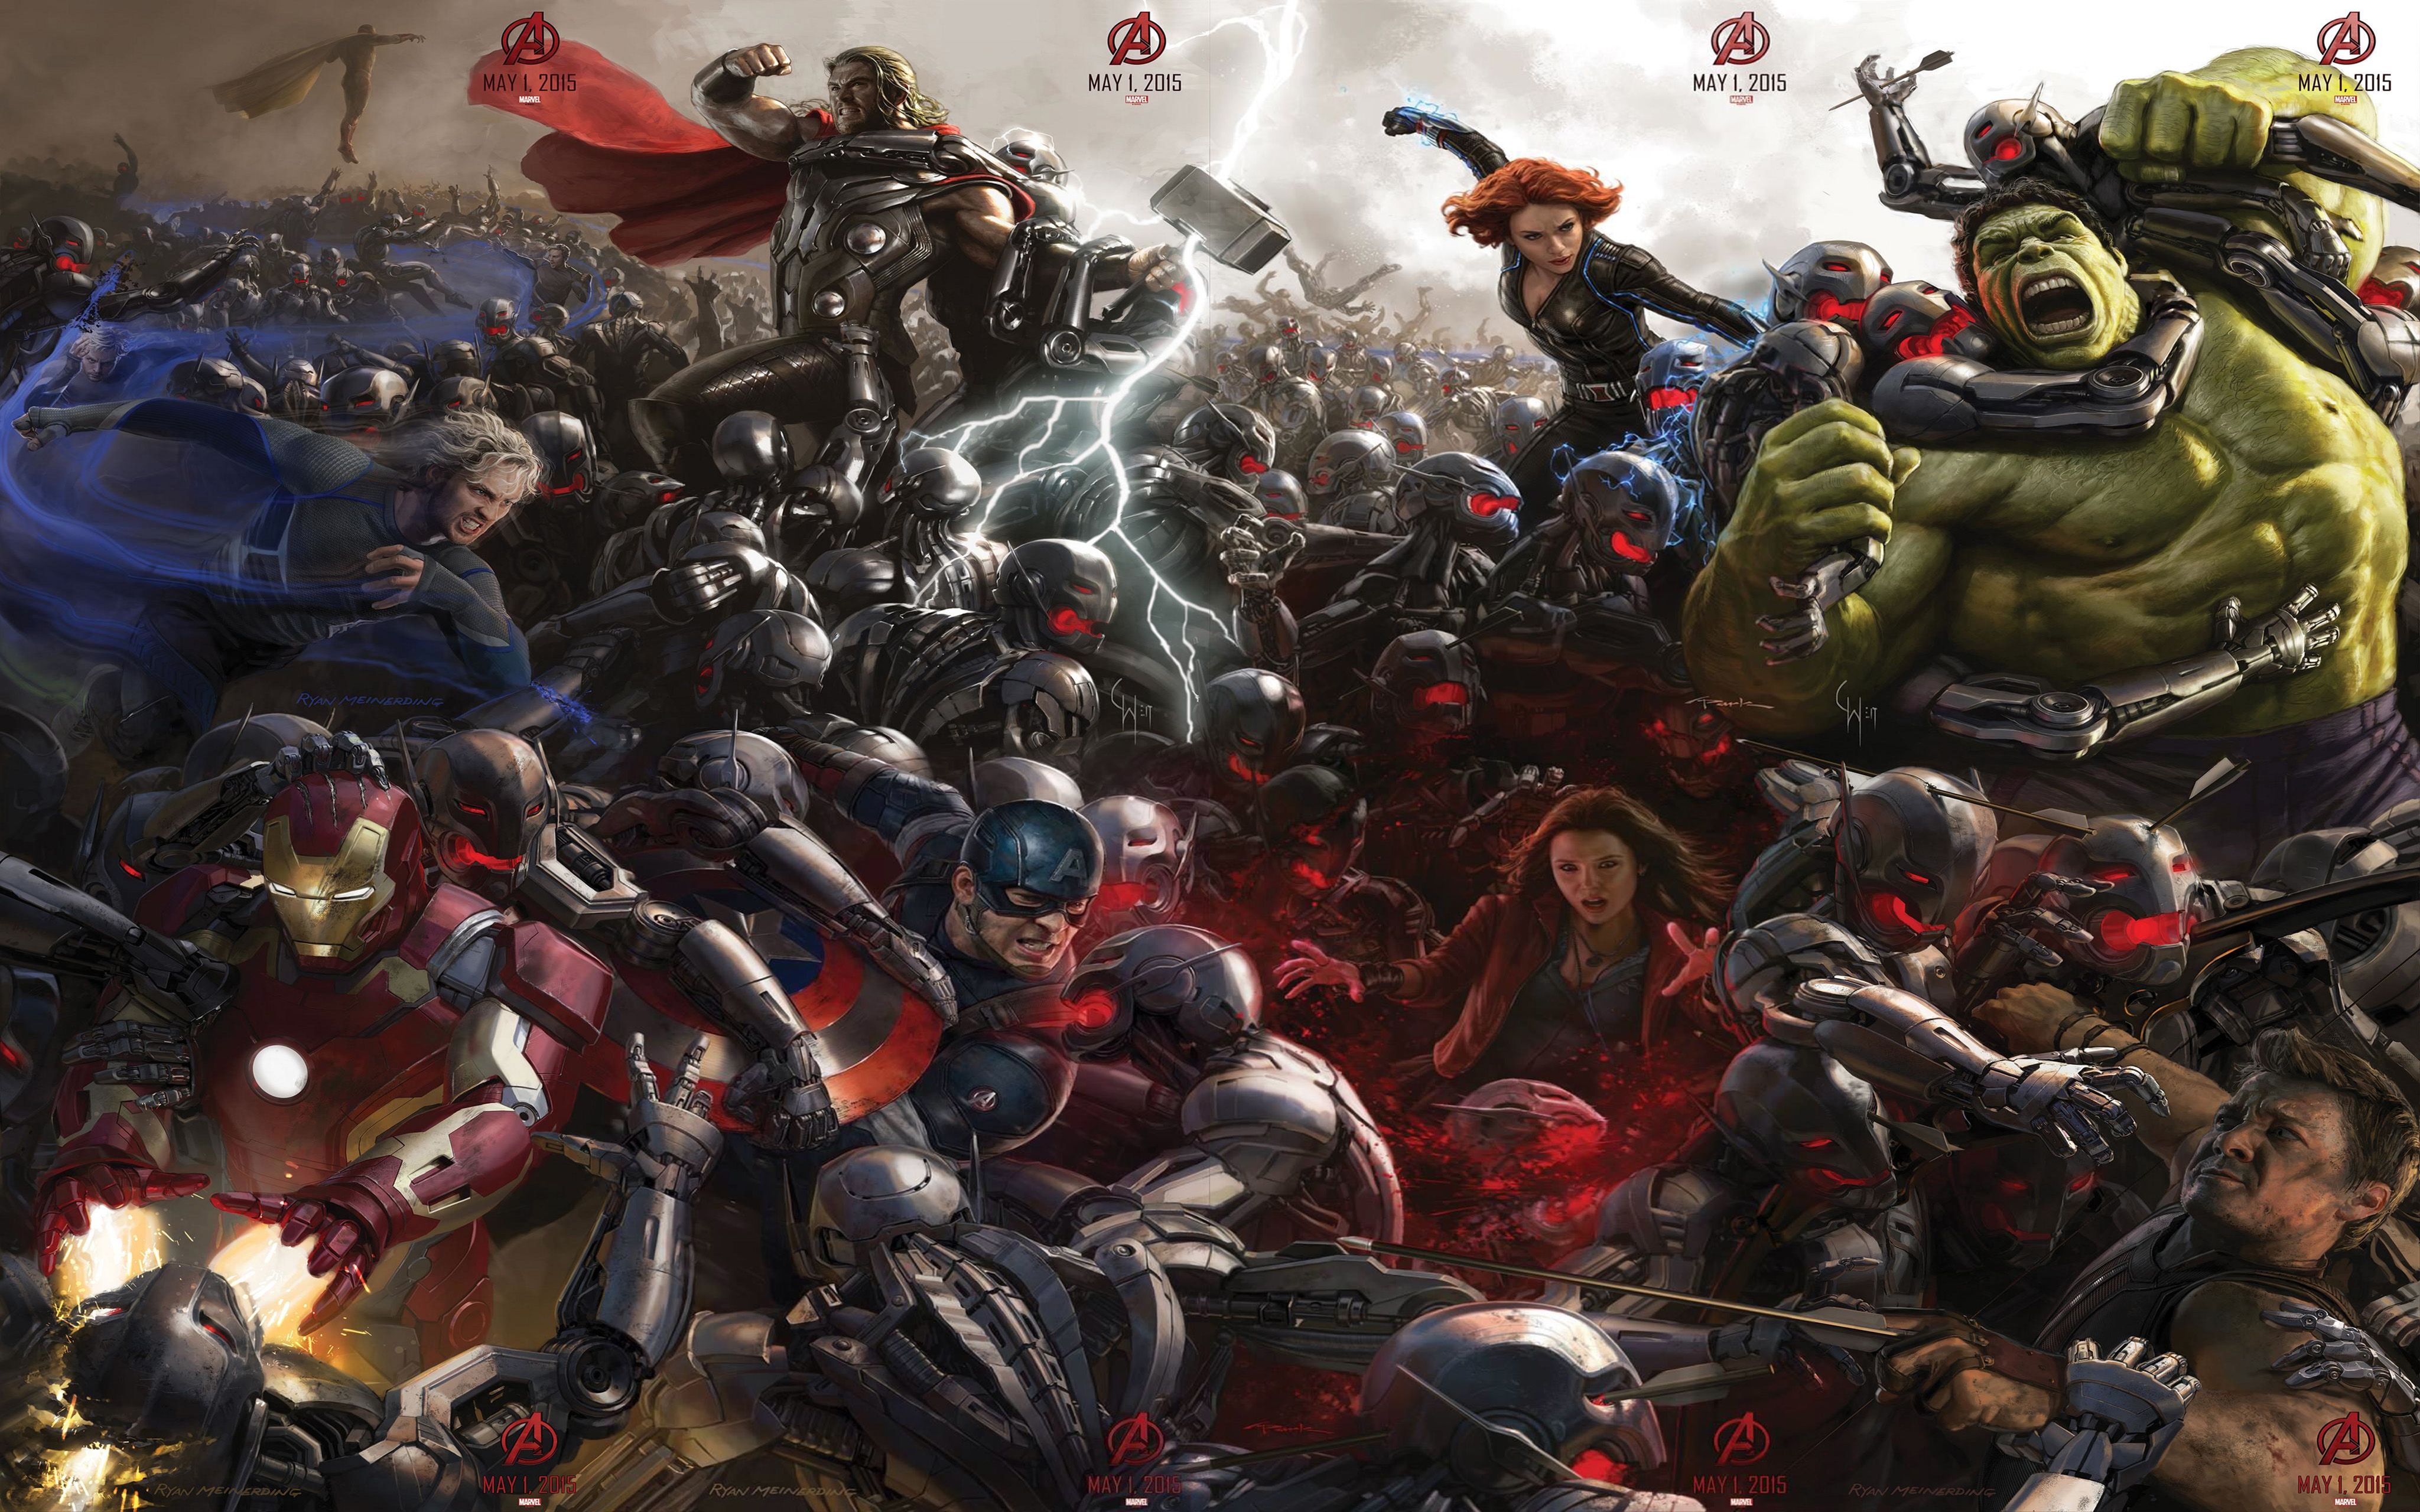 Marvel The Avengers Age Of Ultroniron Battle Poster Art HD Wallpaper For Deskx2560, Wallpaper13.com